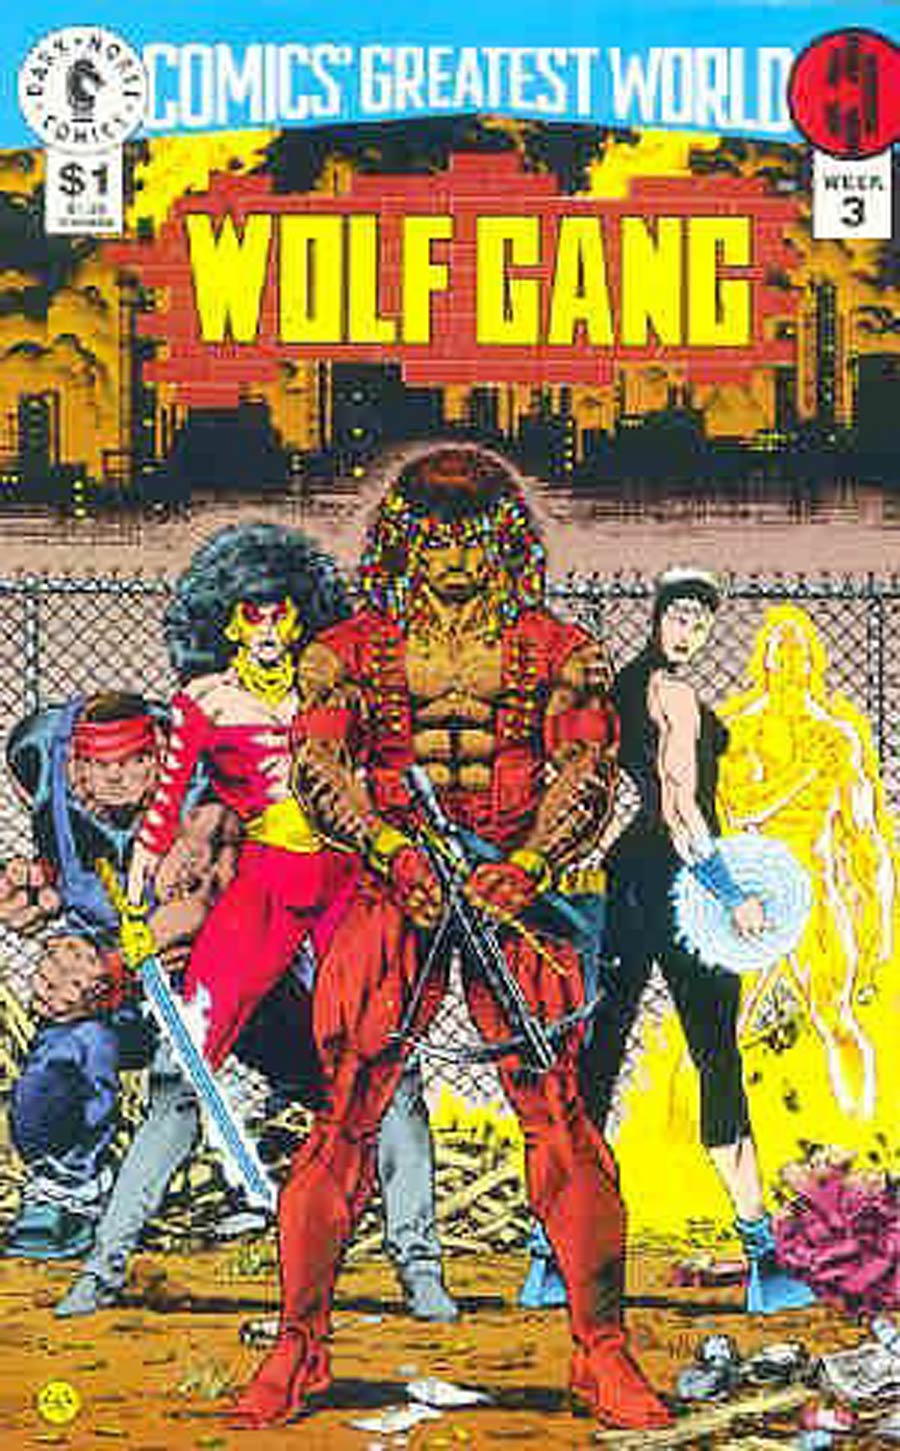 Comics Greatest World Steel Harbor Week #3 Wolfgang